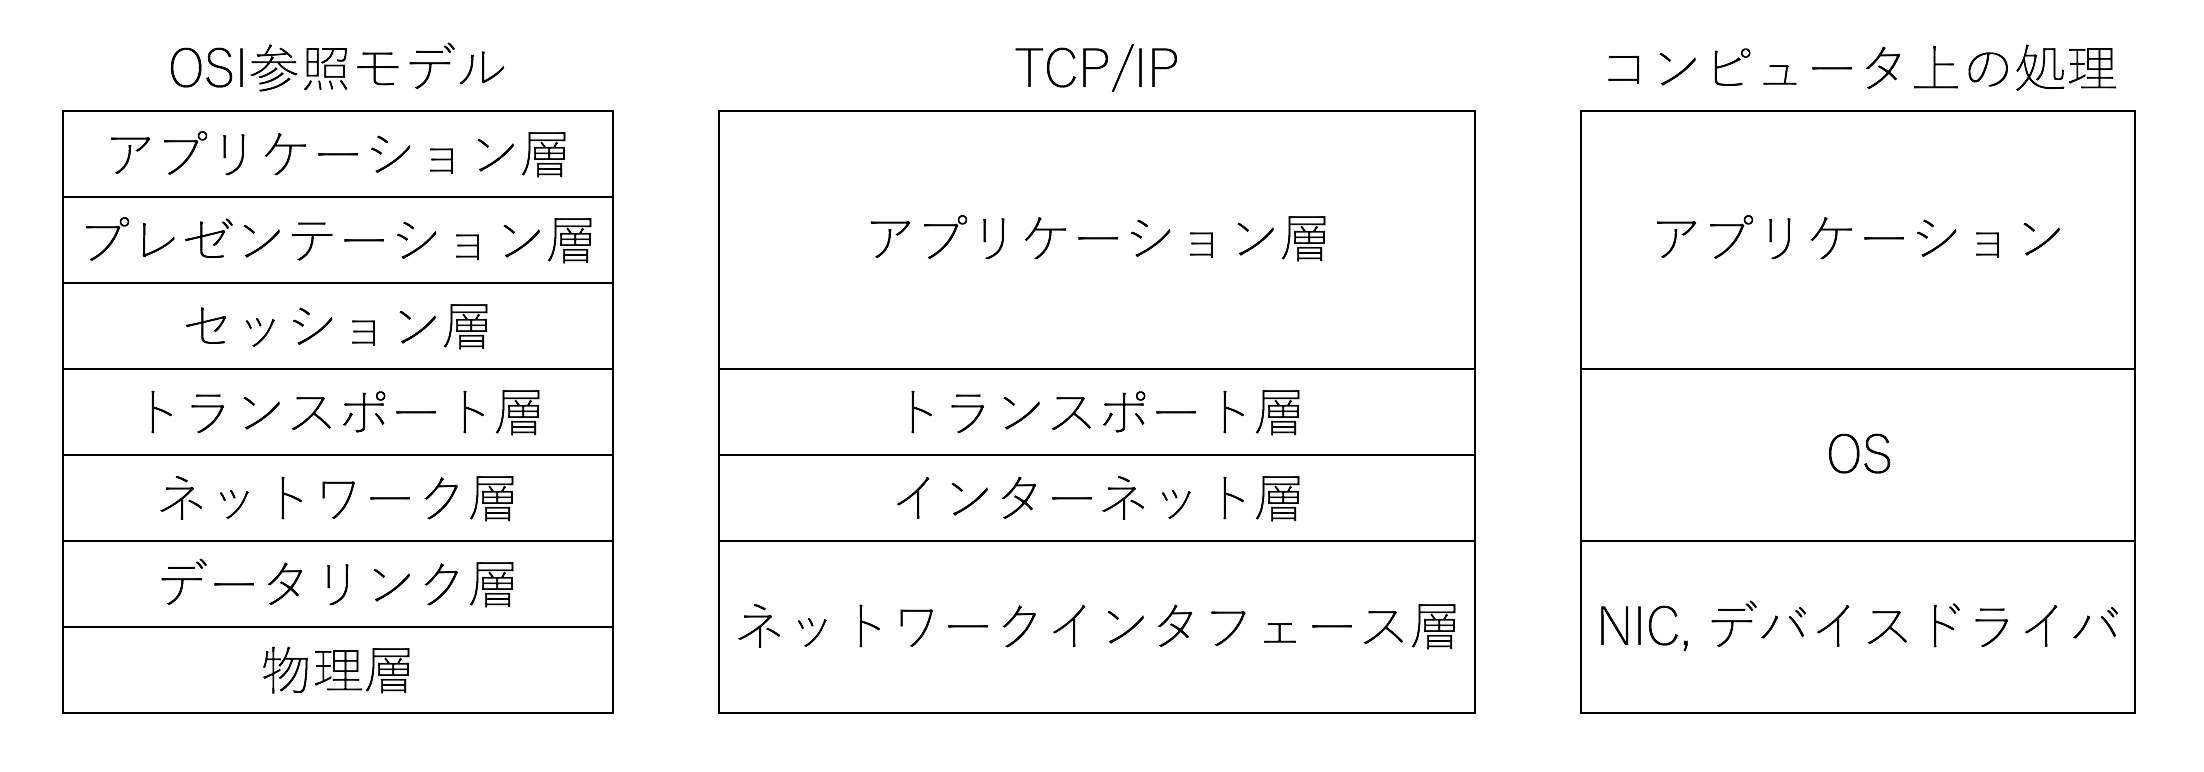 OSI参照モデルとTCP/IPの比較